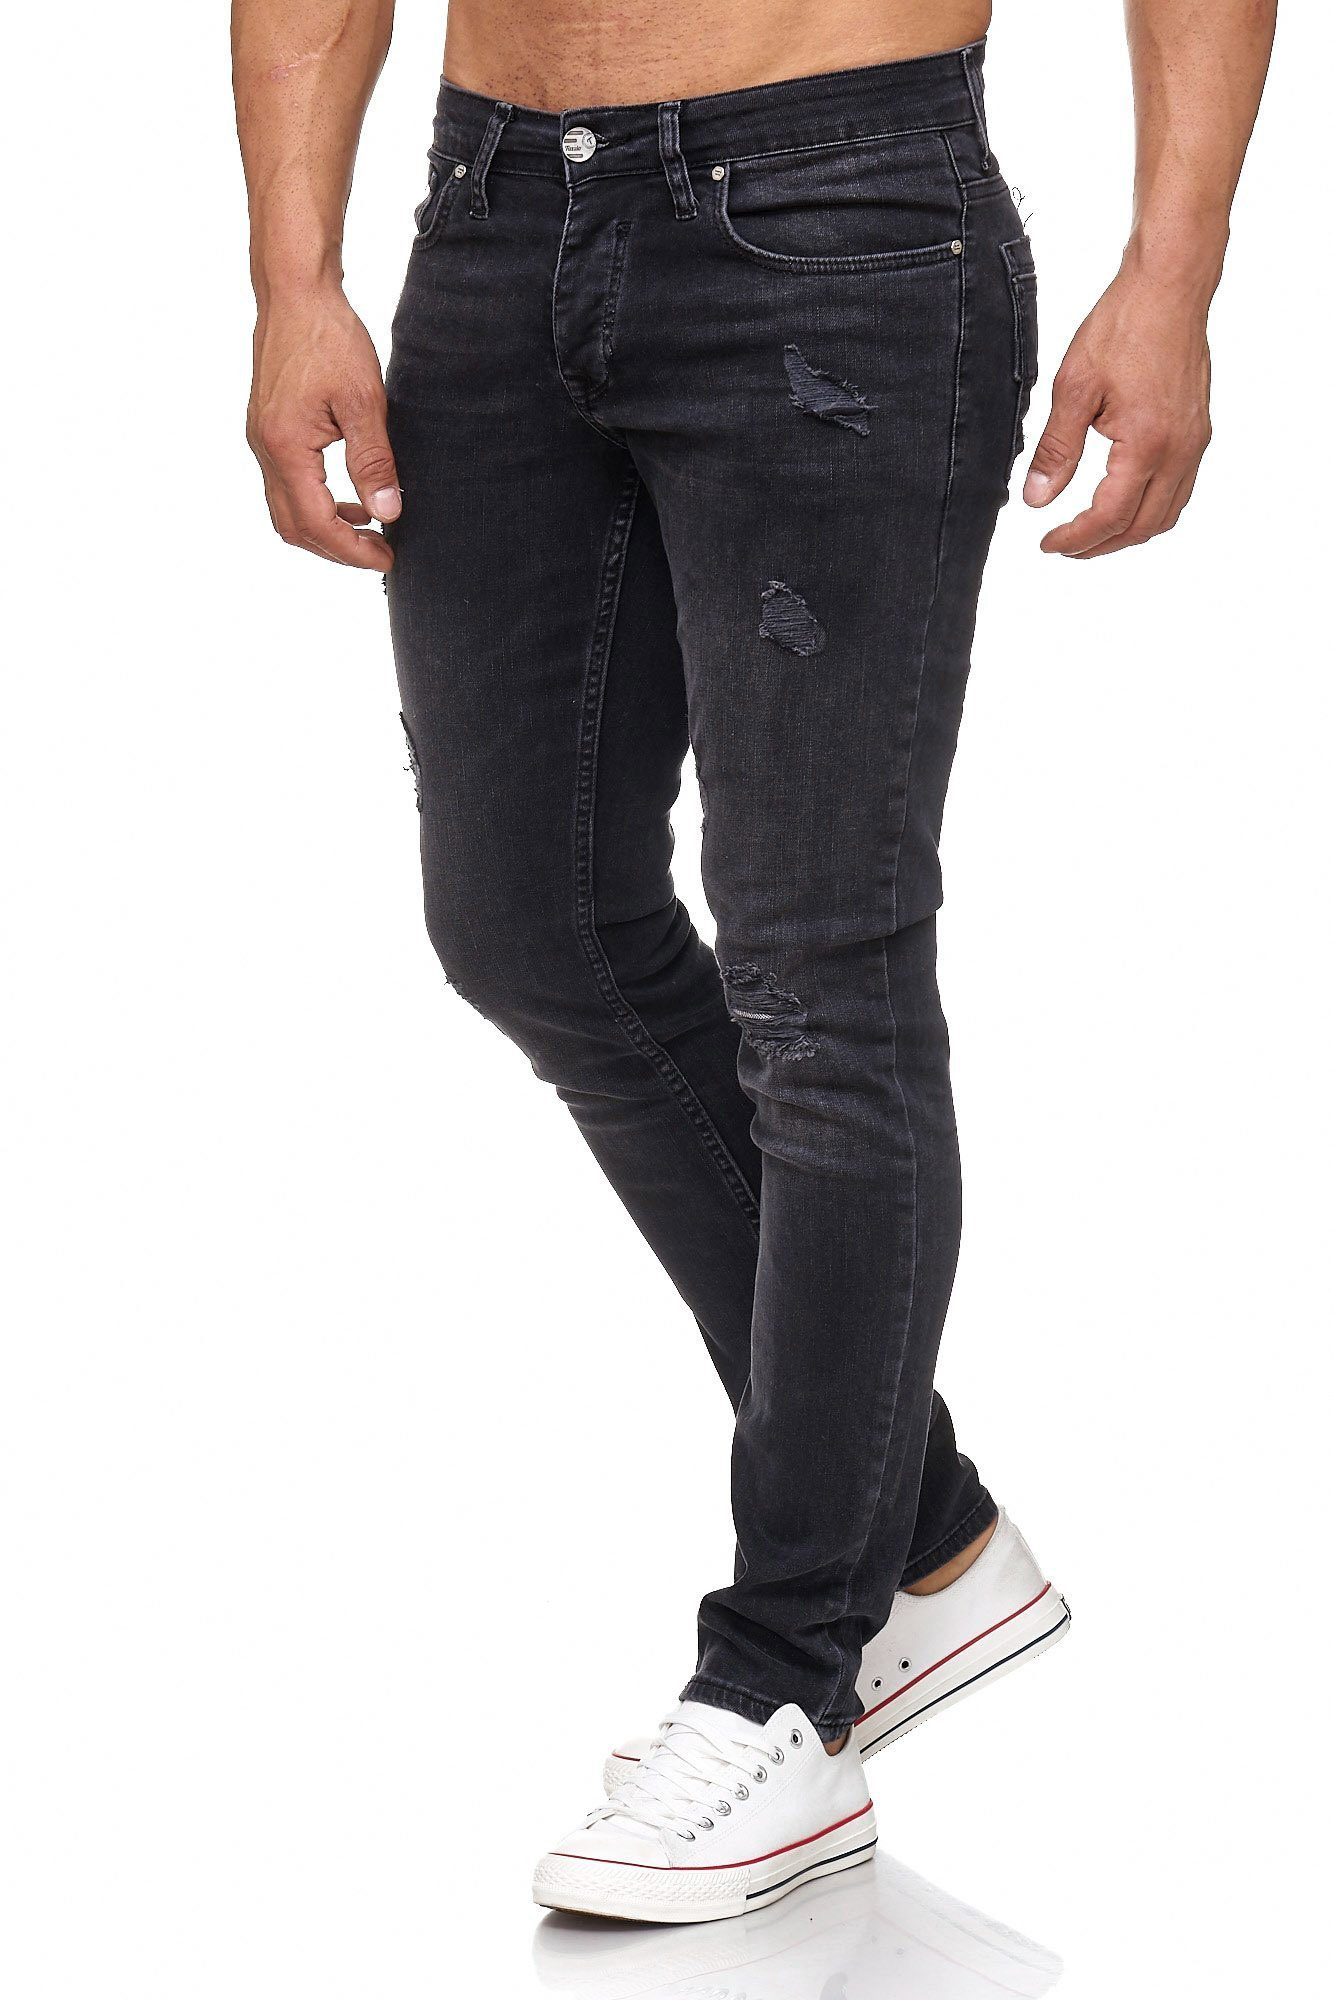 Tazzio Slim-fit-Jeans 17502 im Destroyed-Look schwarz | Stretchjeans